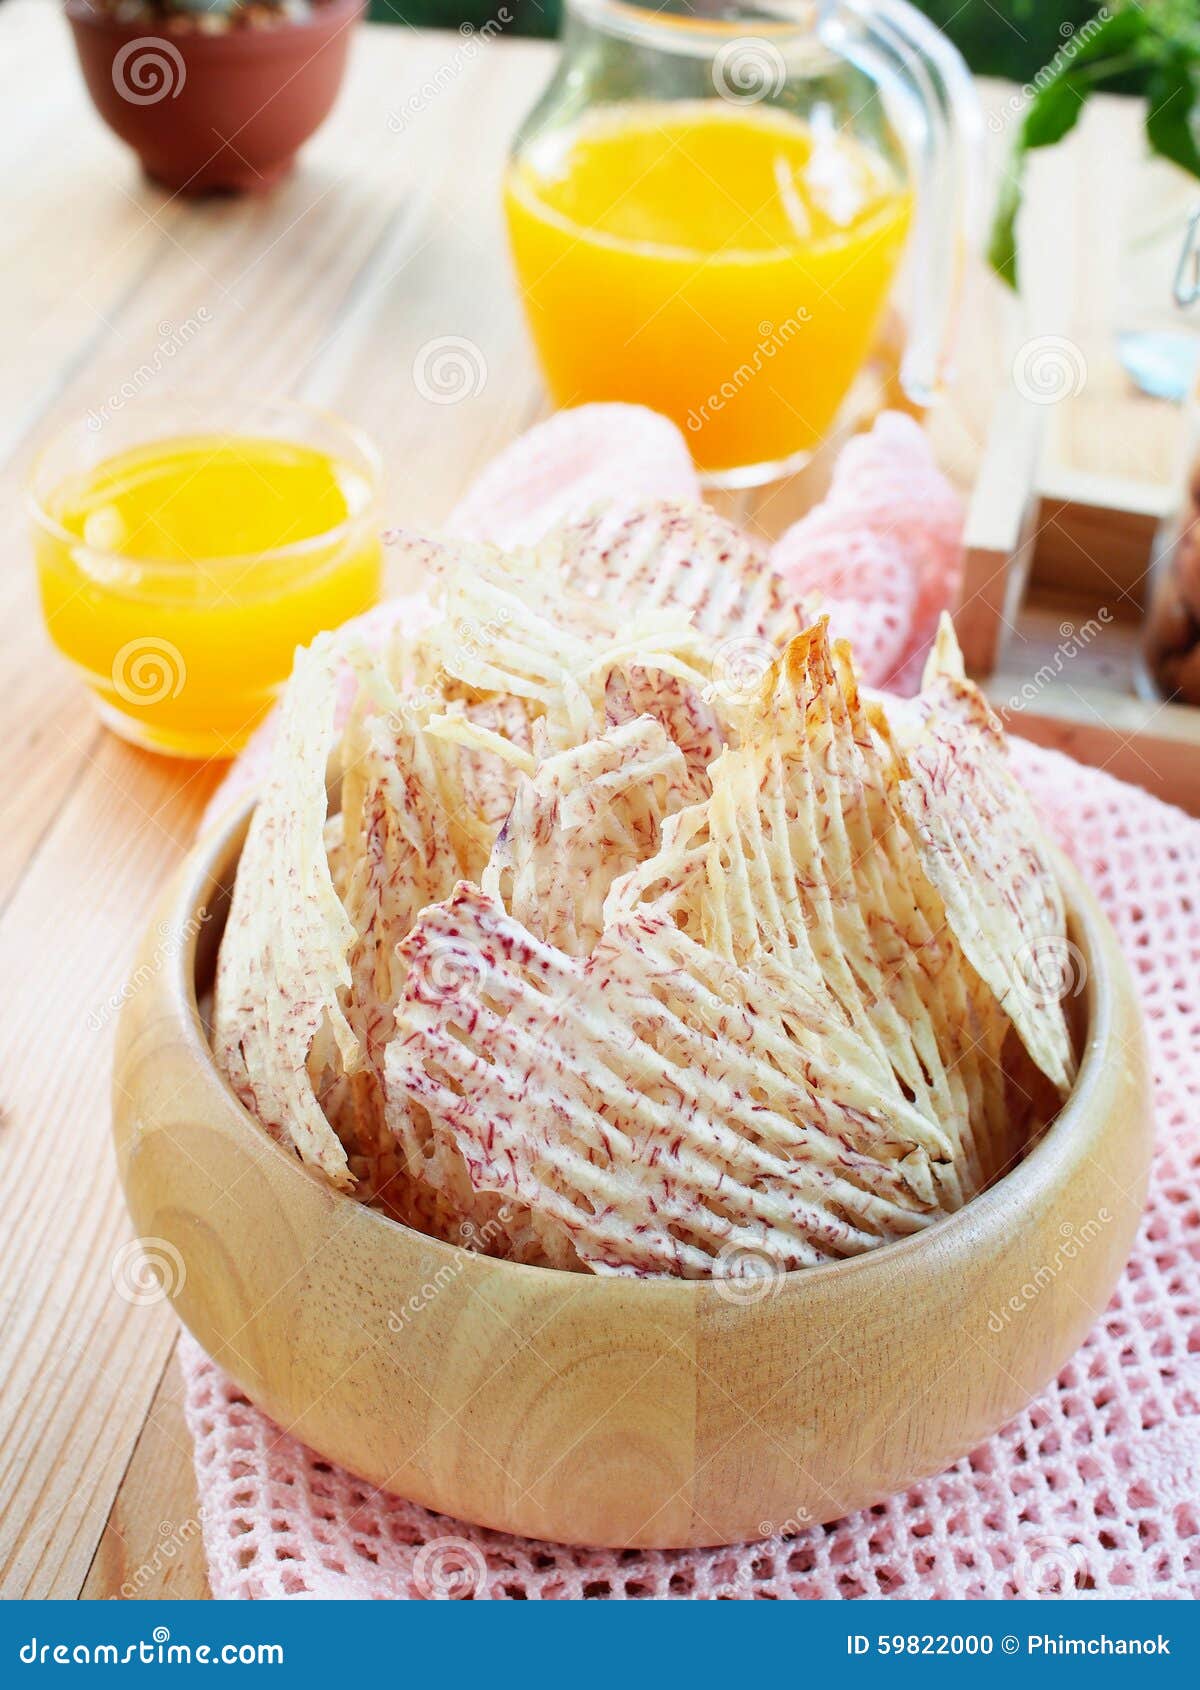 Fried taro stock photo. Image of taro, food, table, wood - 59822000